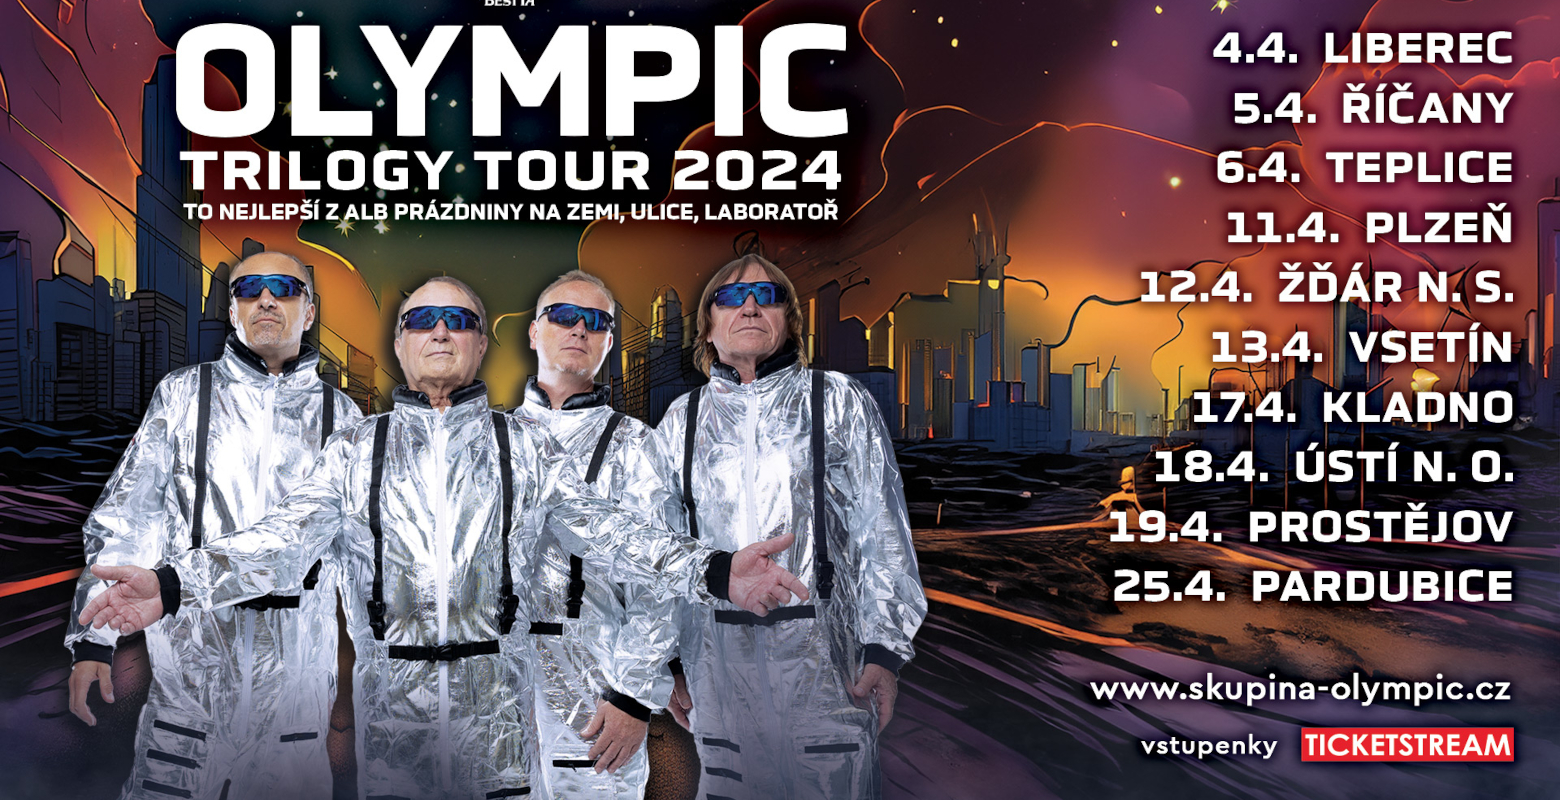 Olympic Trilogy Tour Jaro 2024 Vstupenky Ticketstream